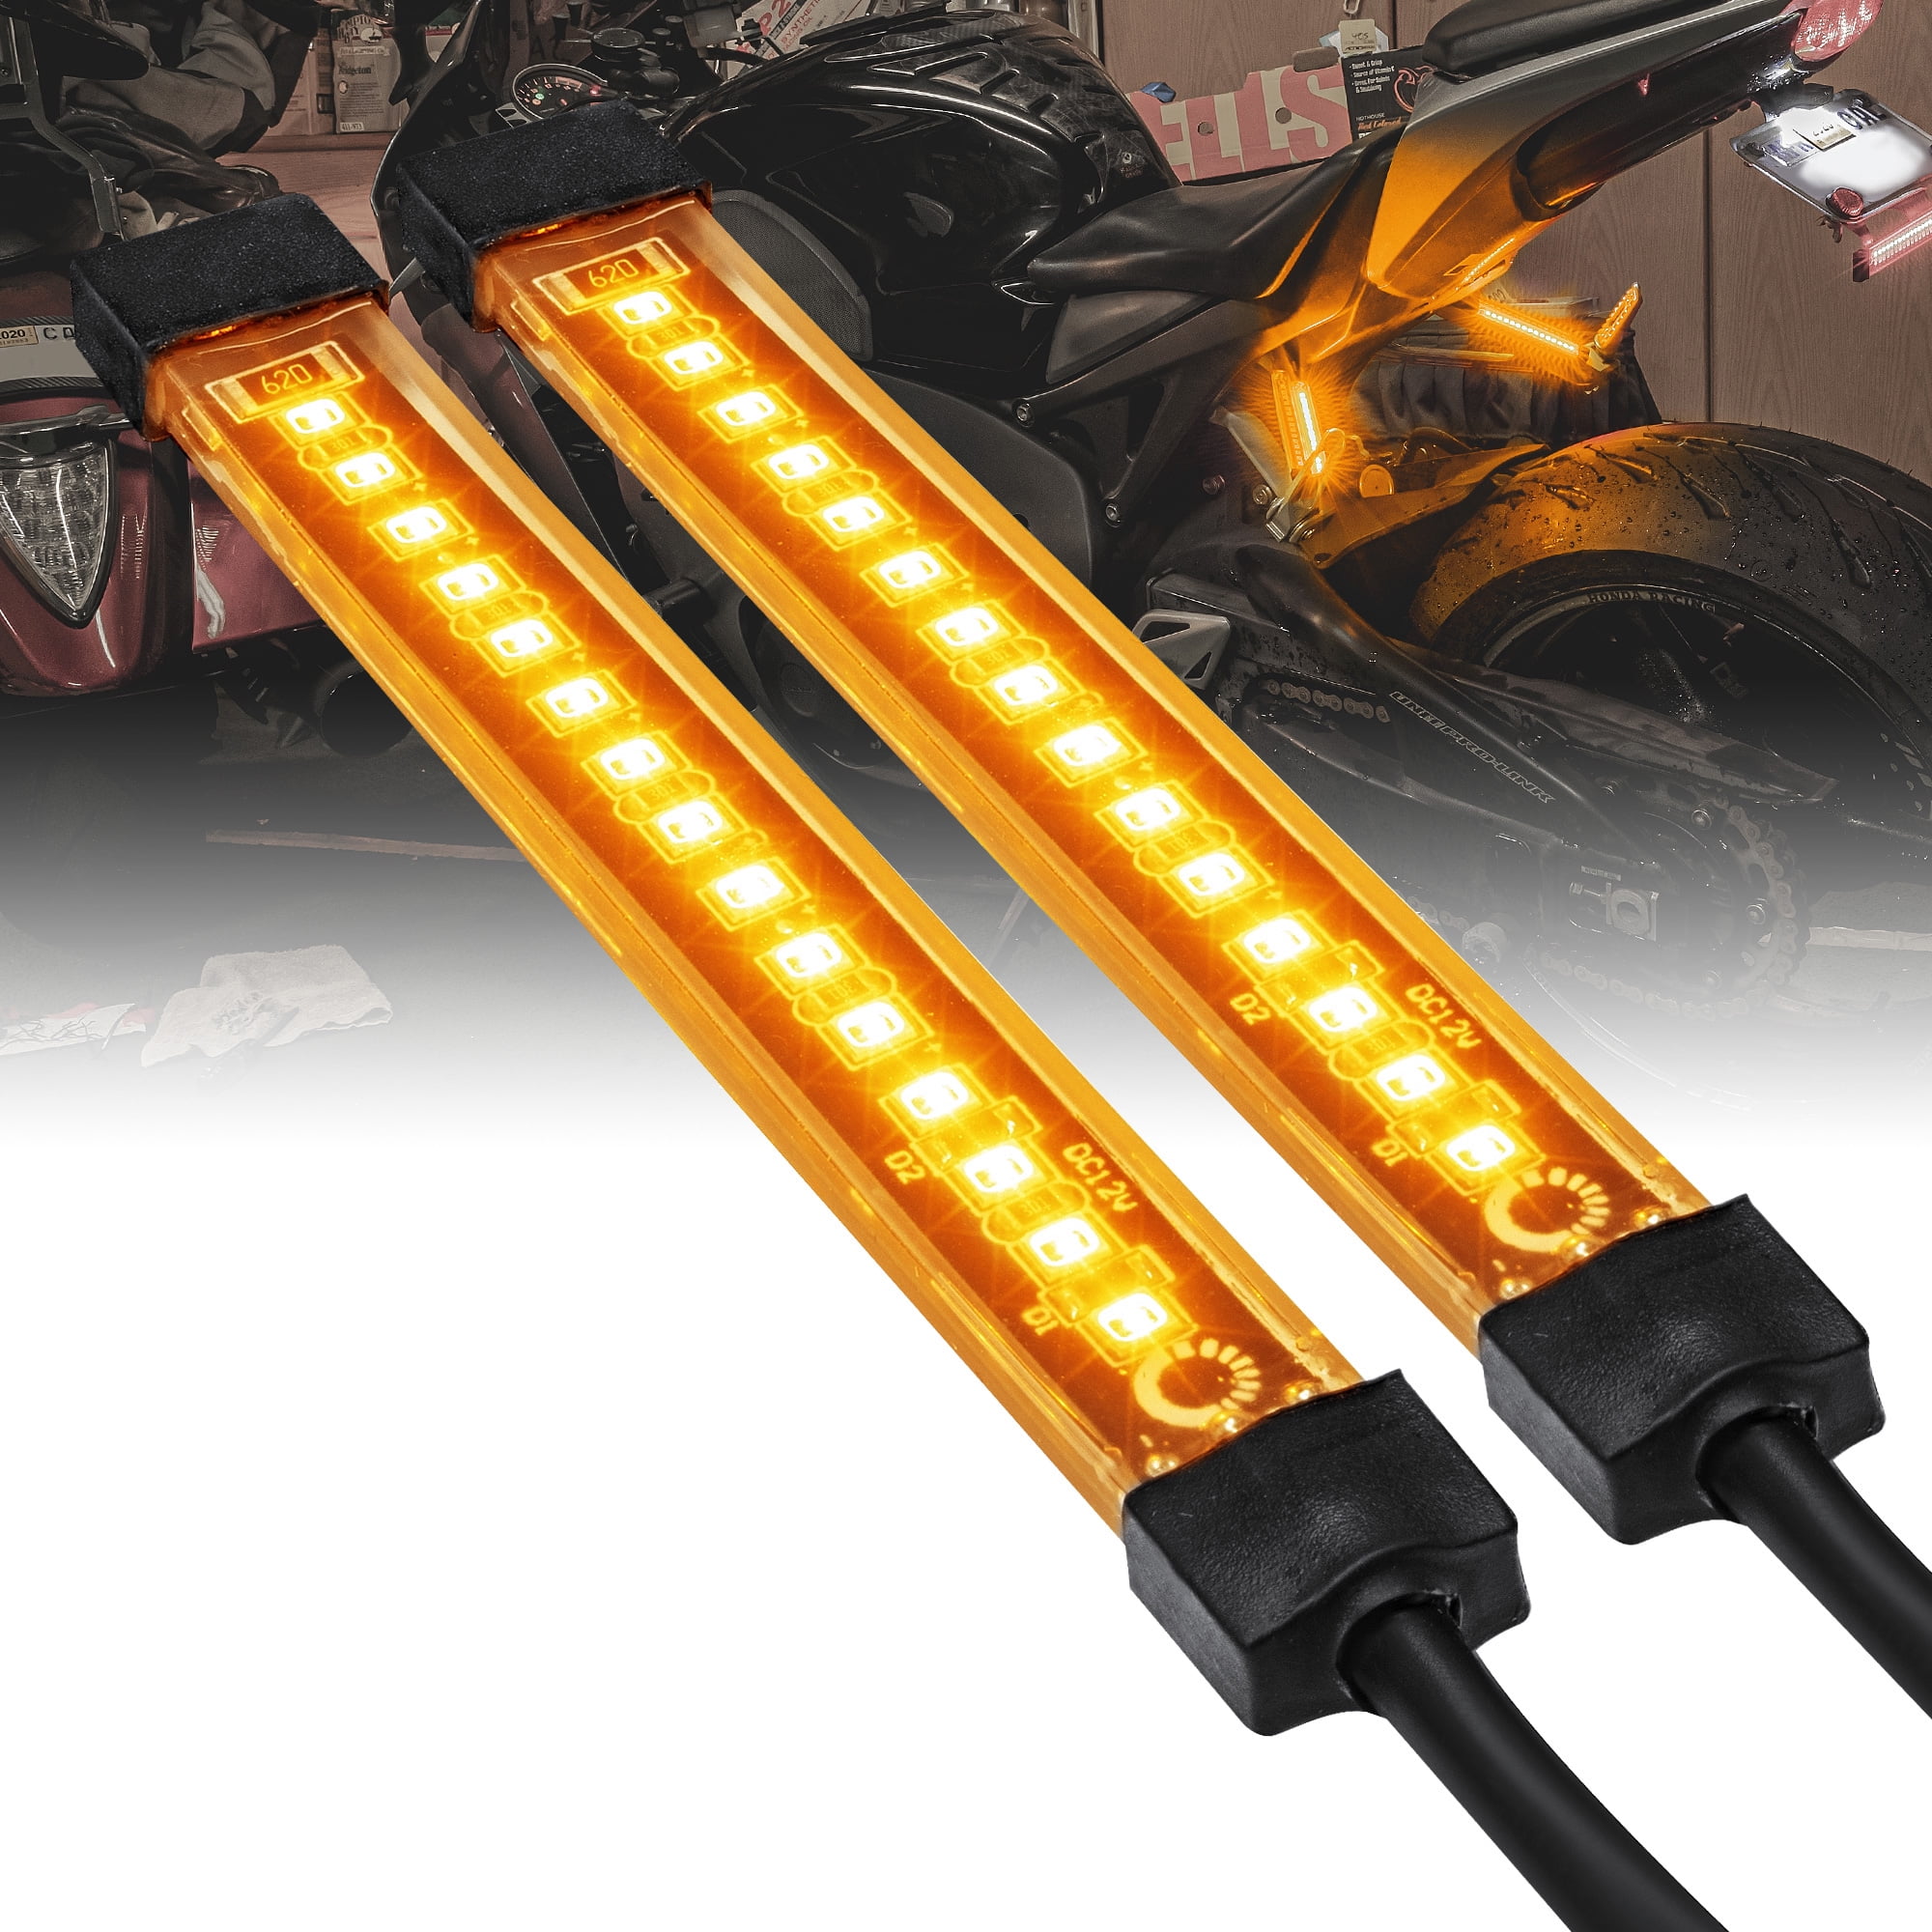 Kingshowstar Universal 2pc 5050 Led Motorcycle Bike Amber LED Turn Signal Indicator Blinker with Total 12 Led 